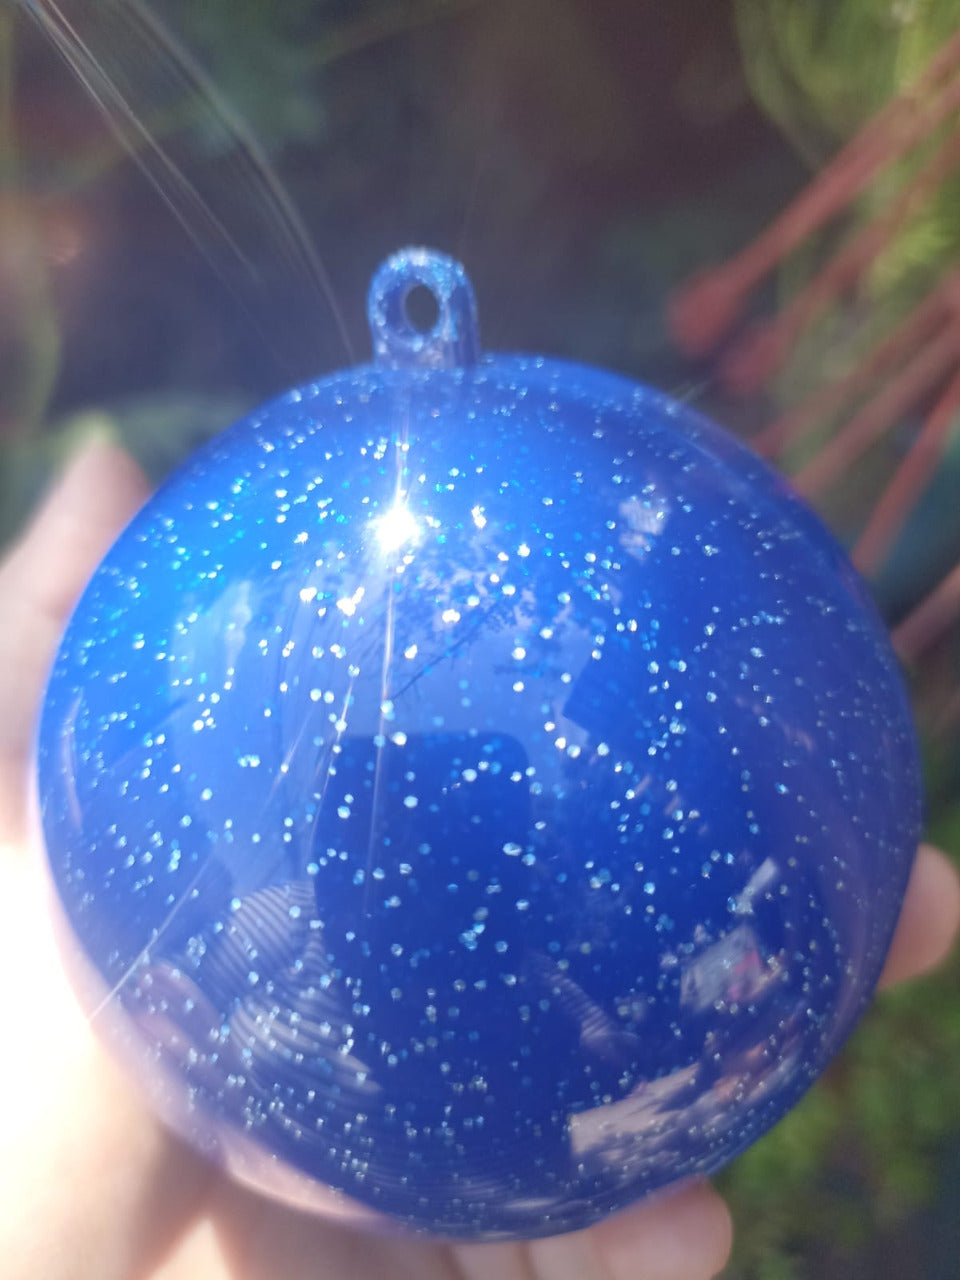 esferas navideñas